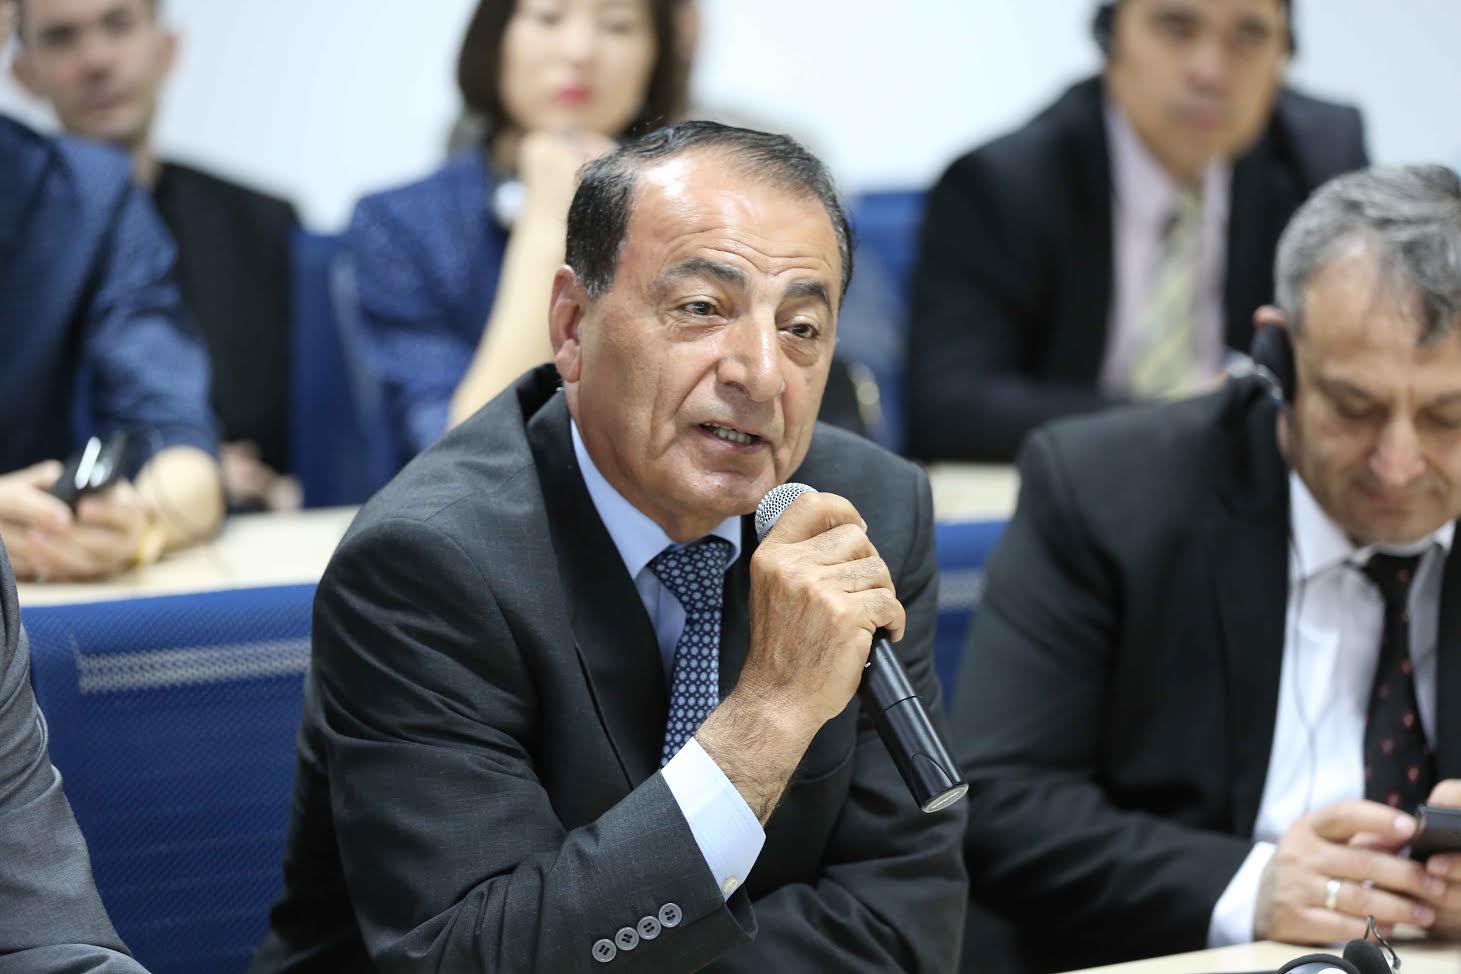 IMAGES : Le Président Macky Sall à l'Université Nazarbayev